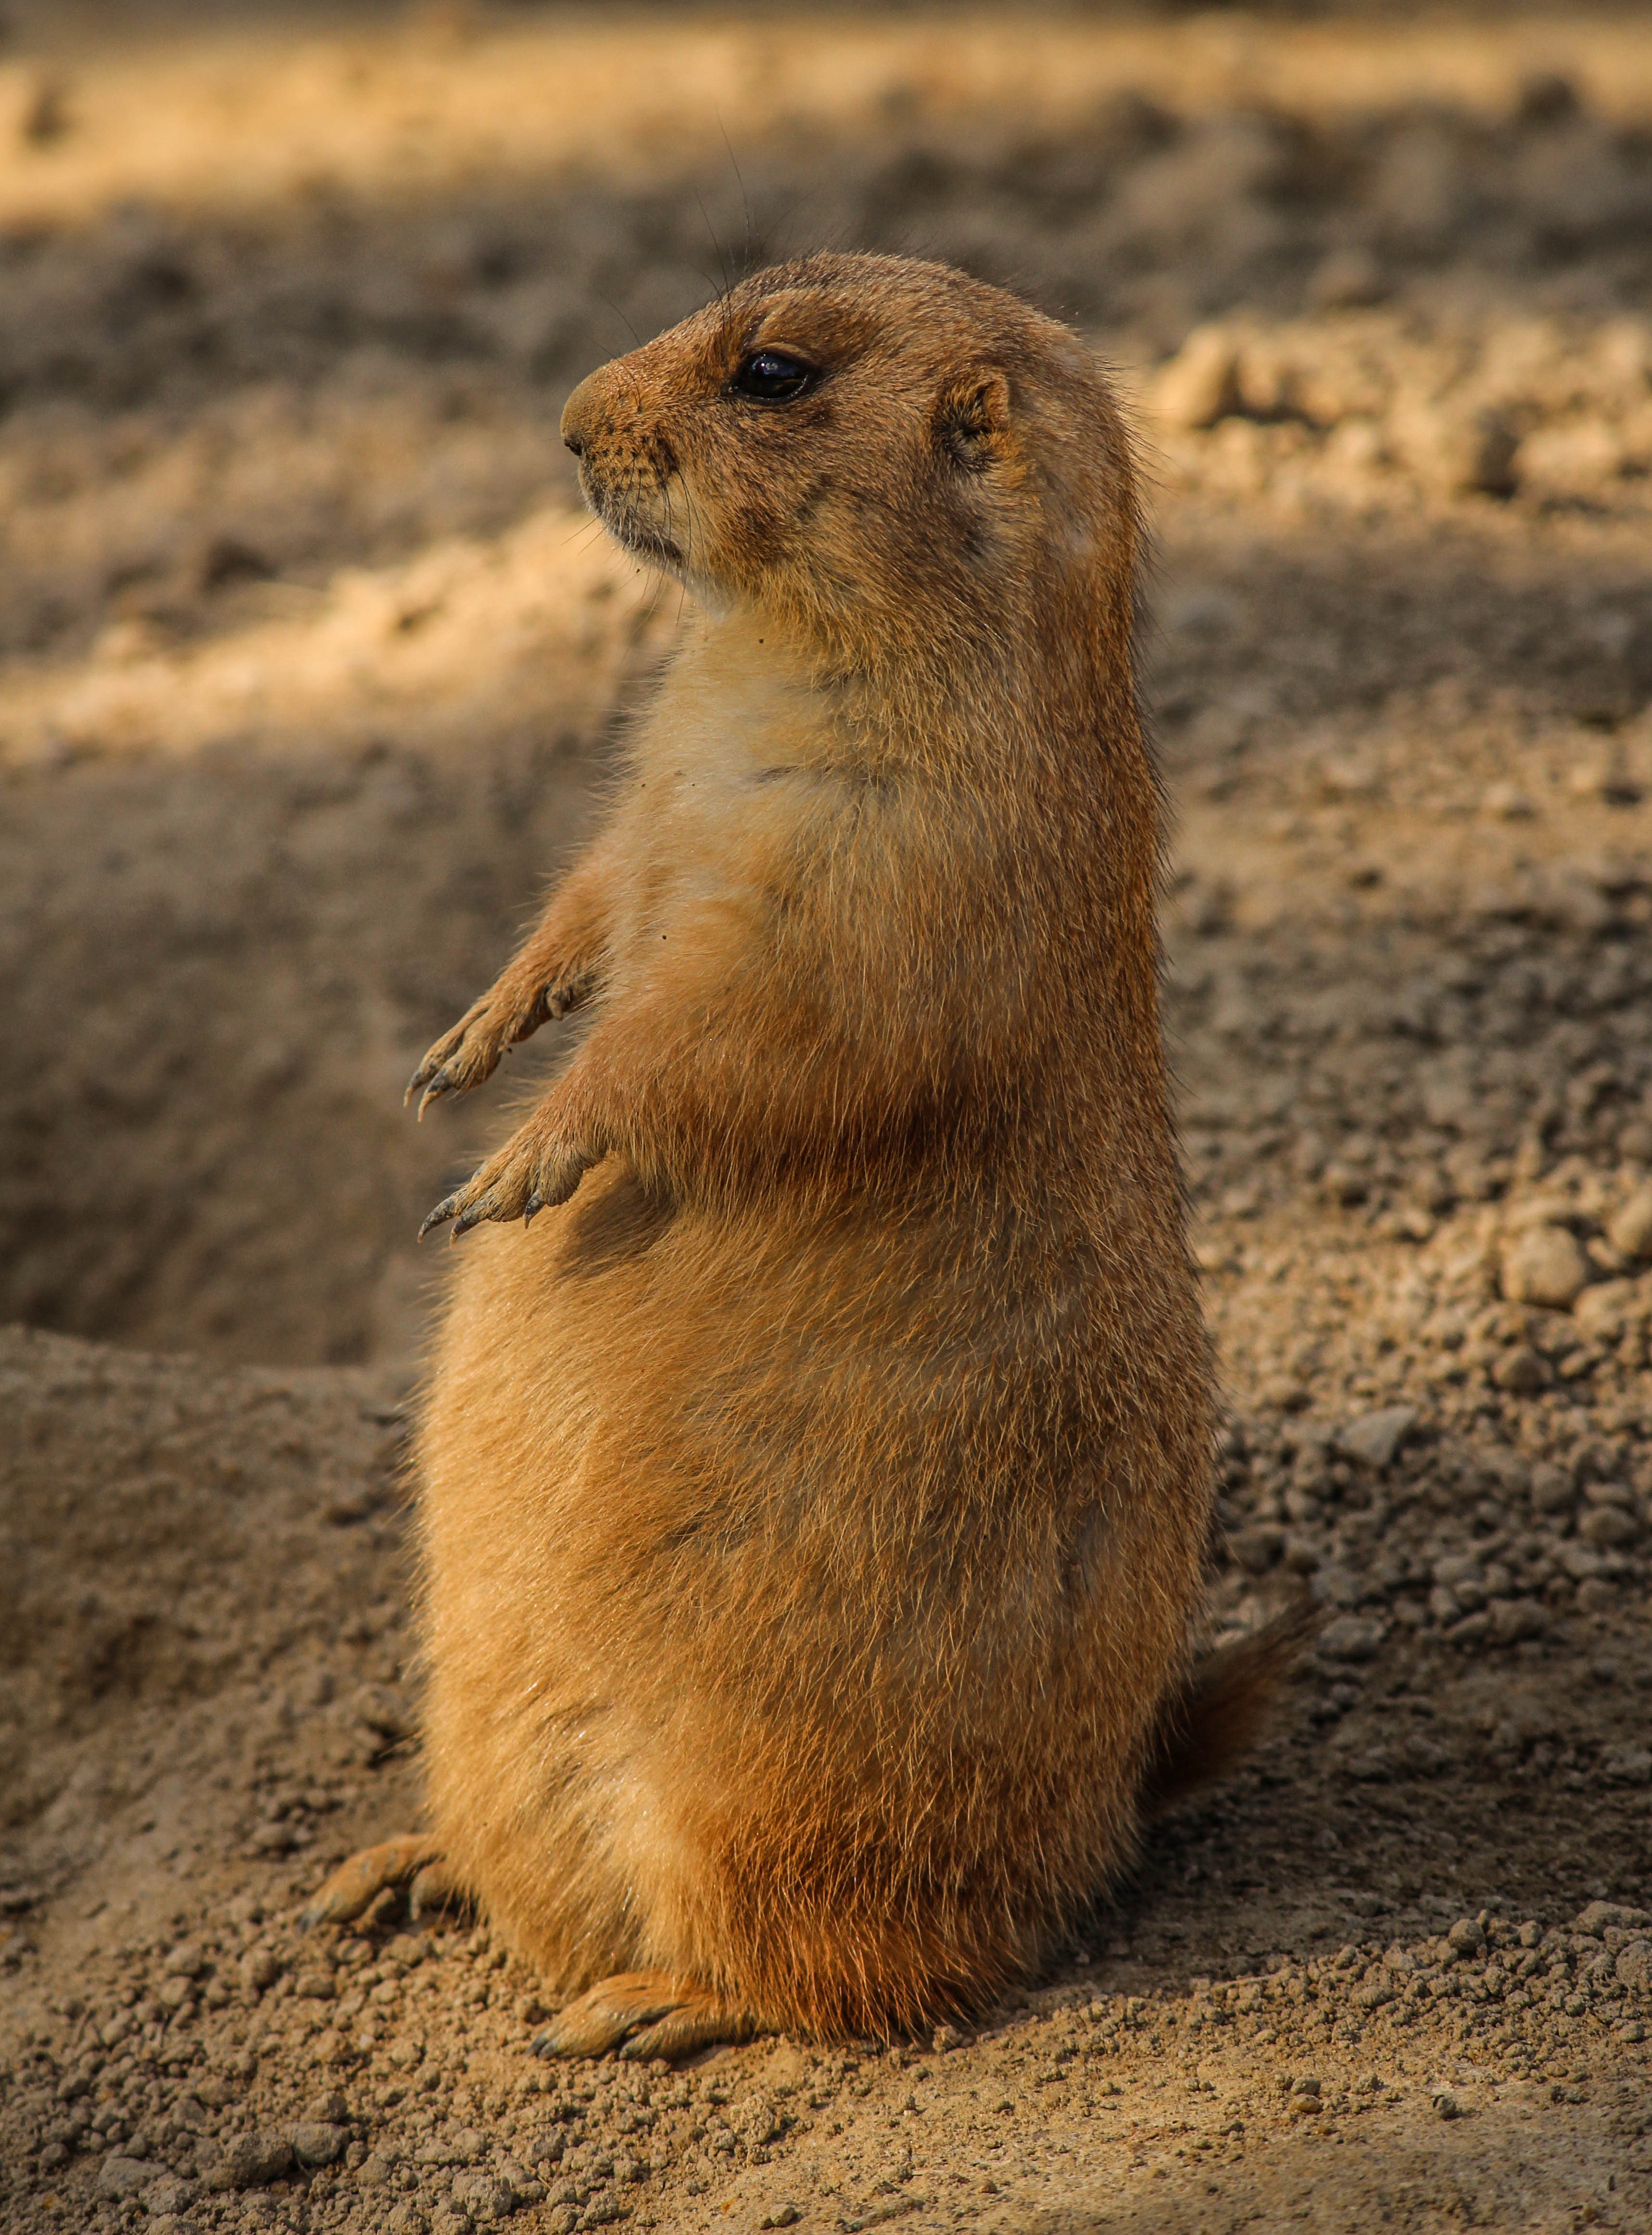 Brown 4 legged mammal standing on gray sand during daytime photo